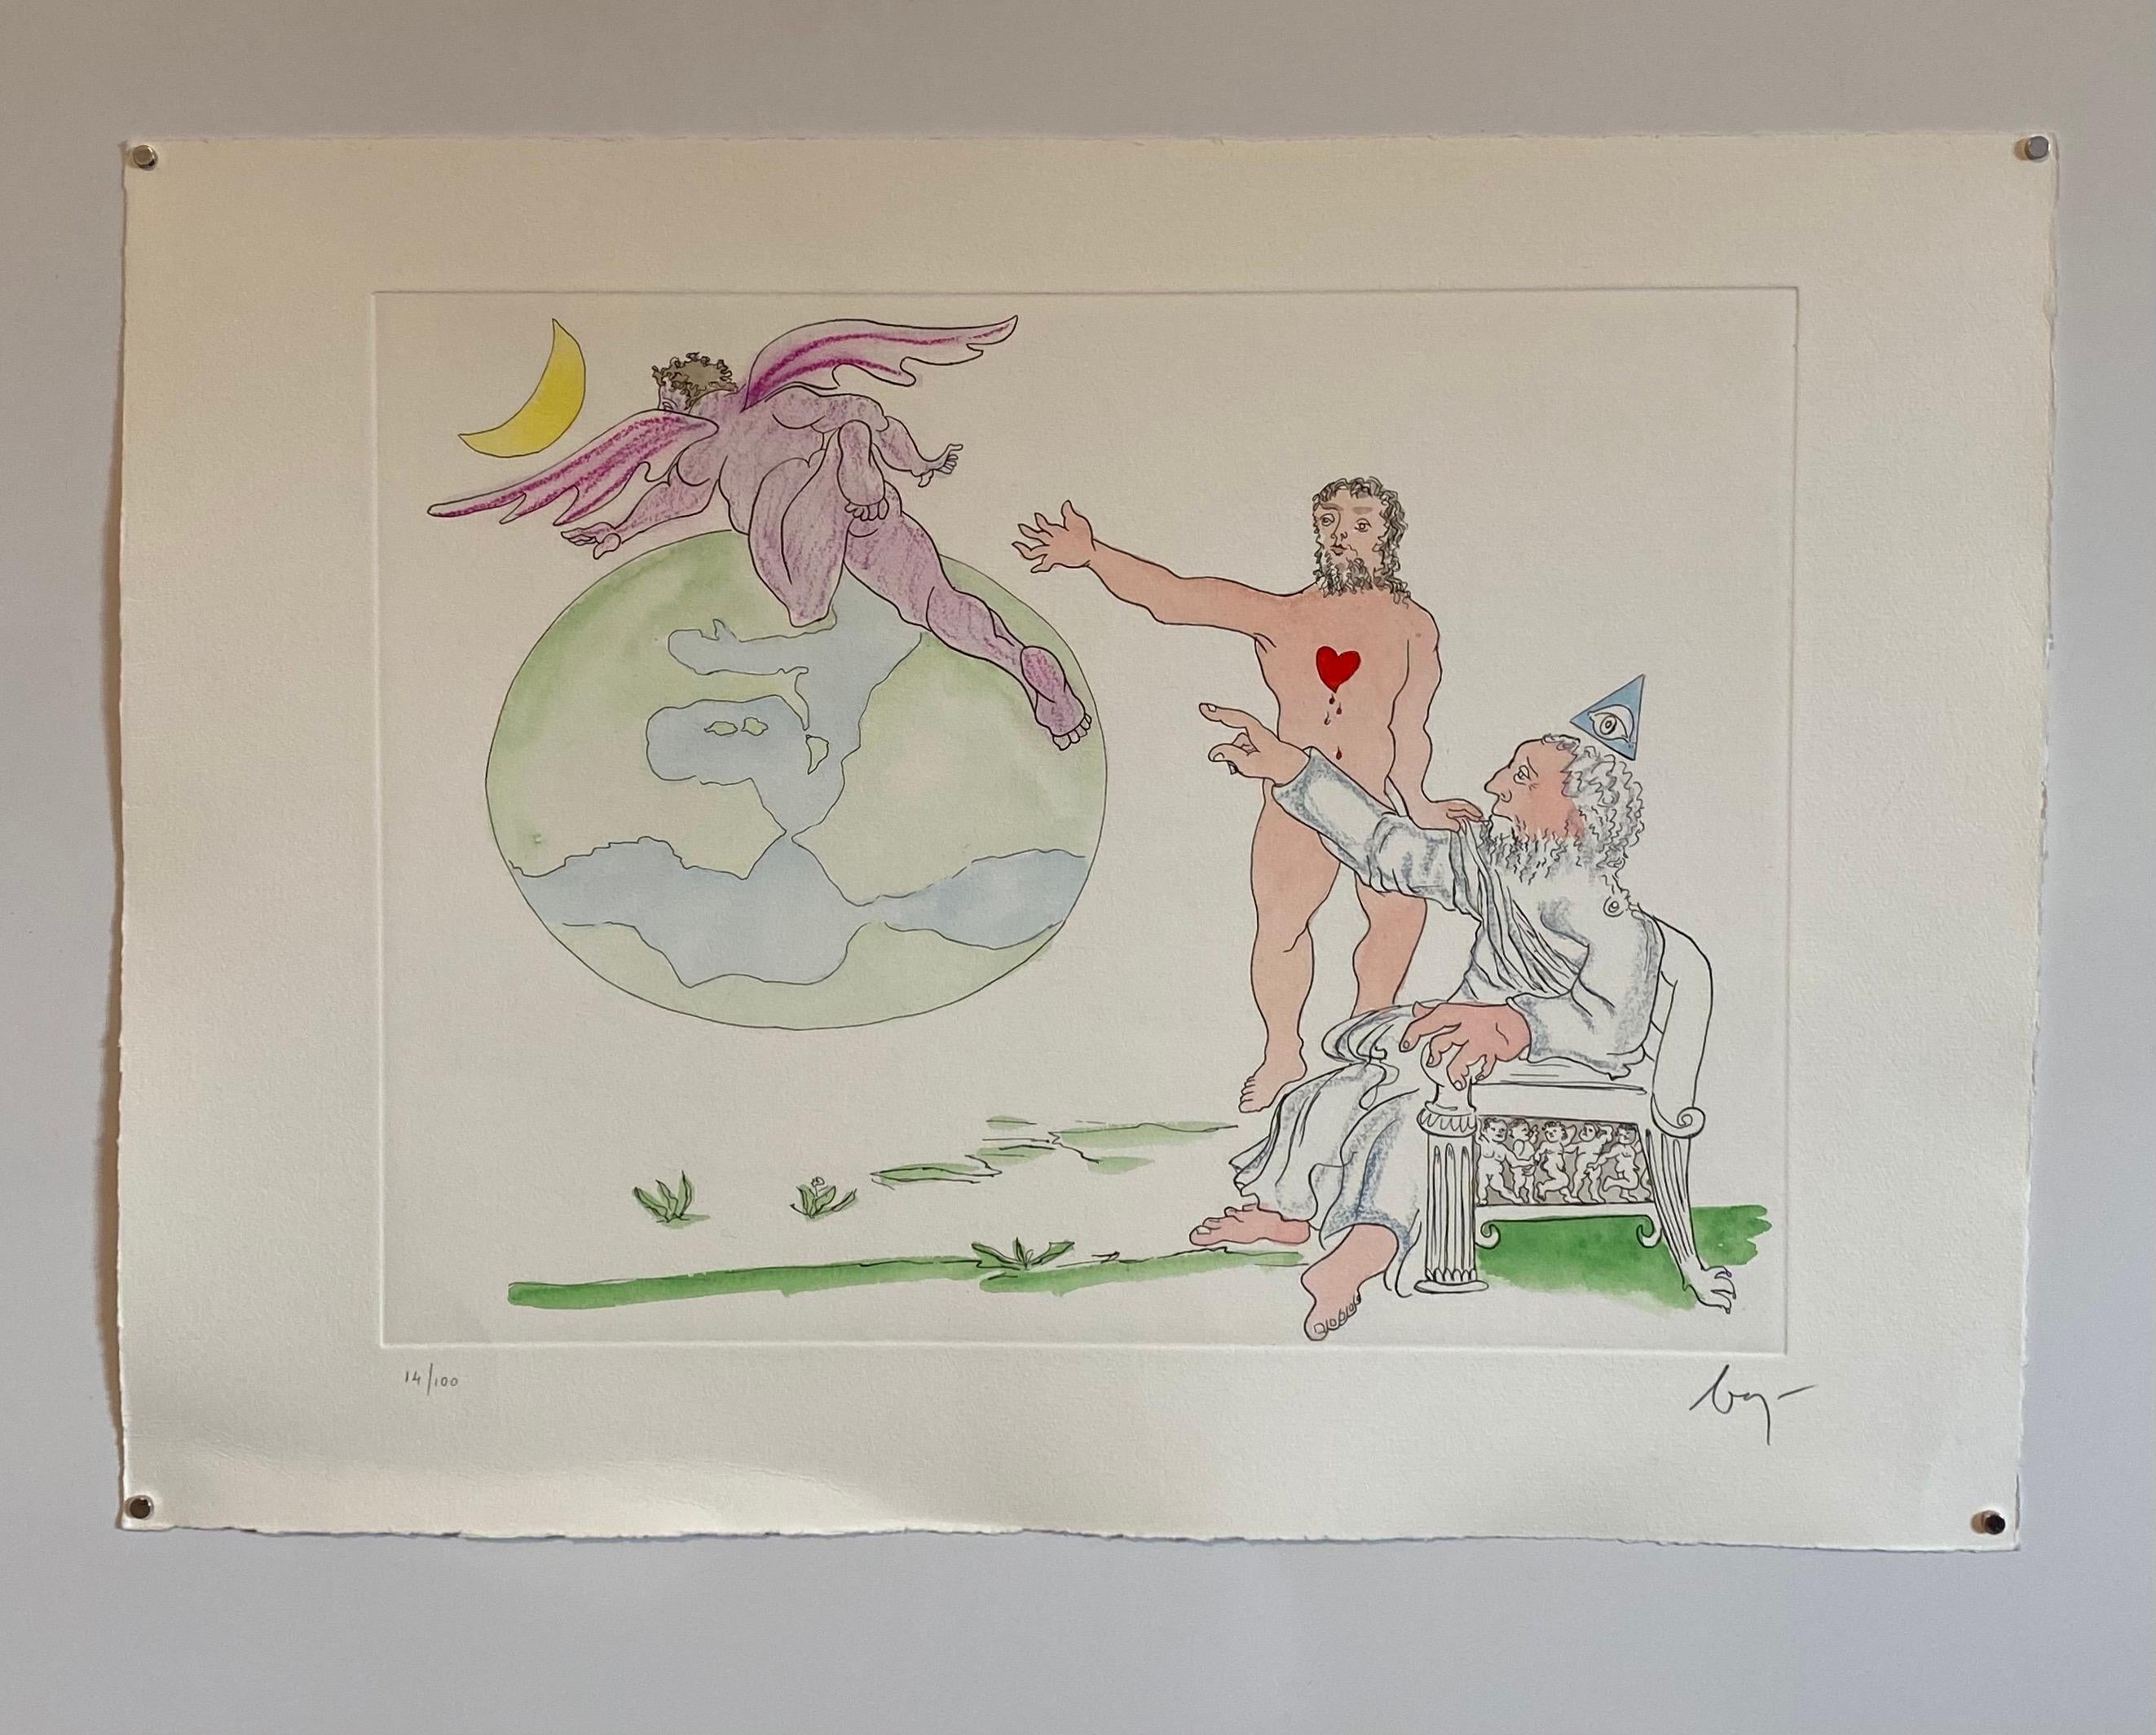 Italian Surrealist Aquatint Etching Enrico Baj Pop Art with Watercolor Painting For Sale 1